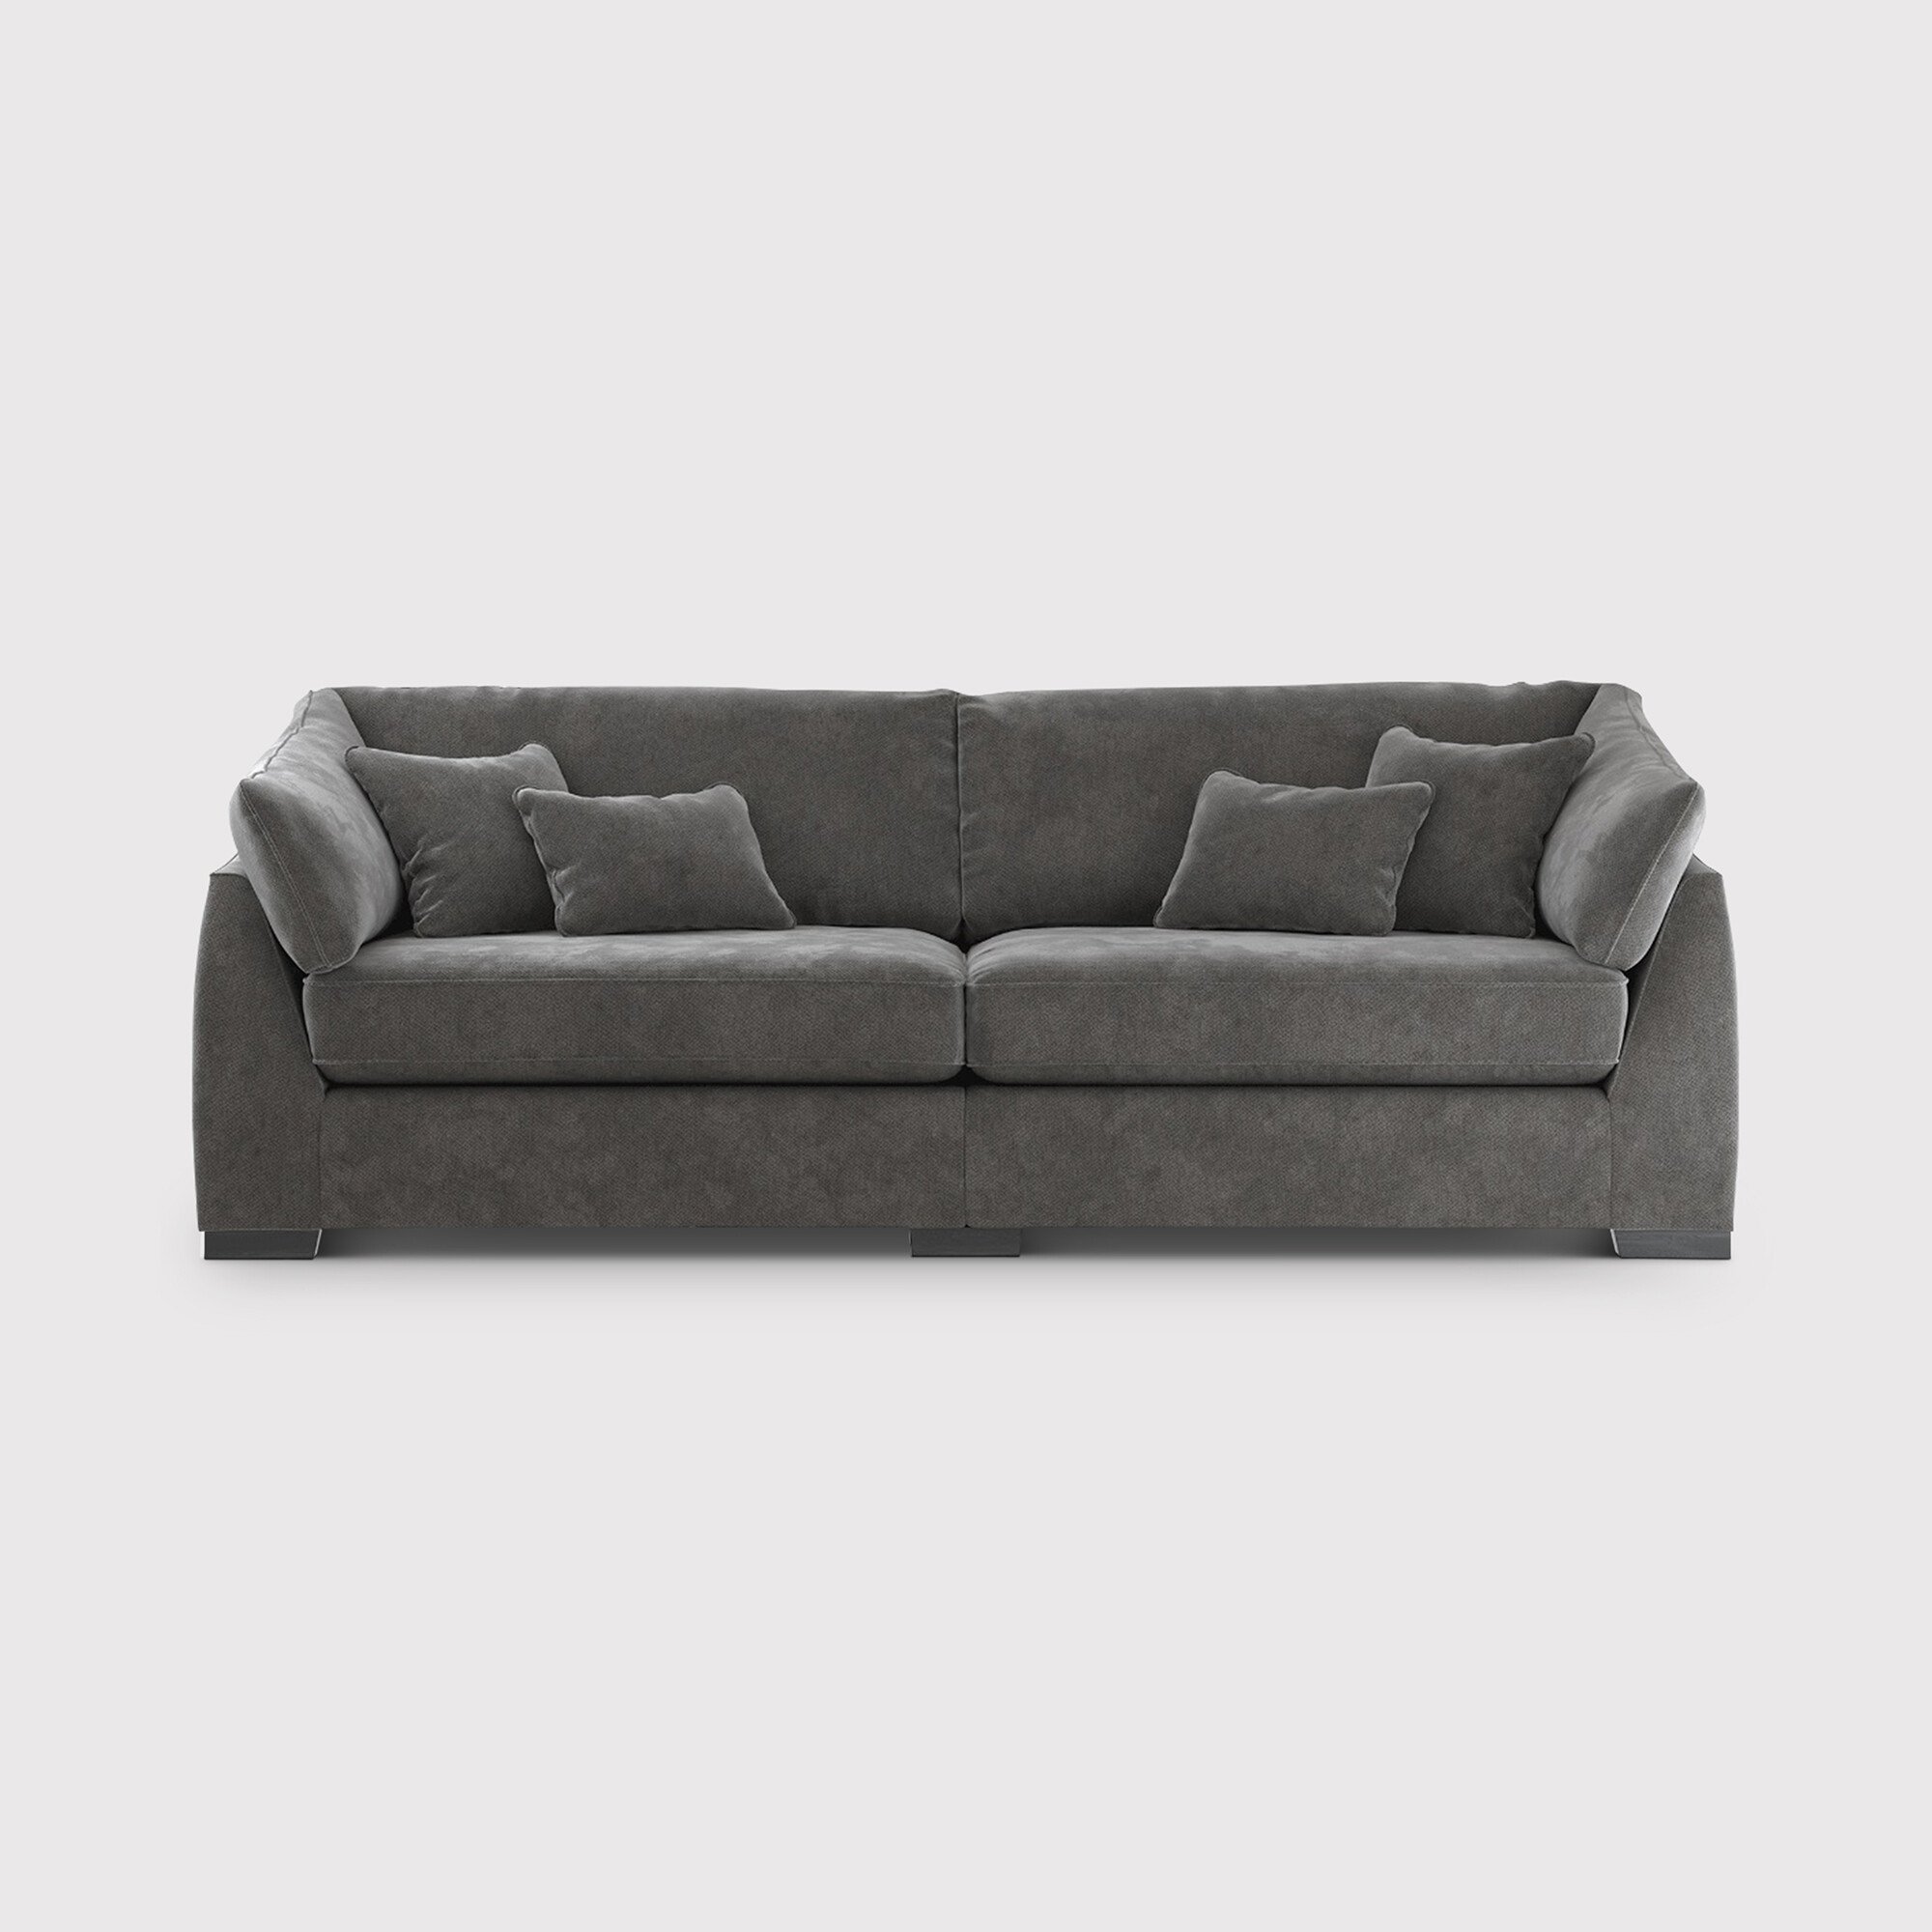 Borelly 4 Seater Sofa, Grey Fabric | Barker & Stonehouse